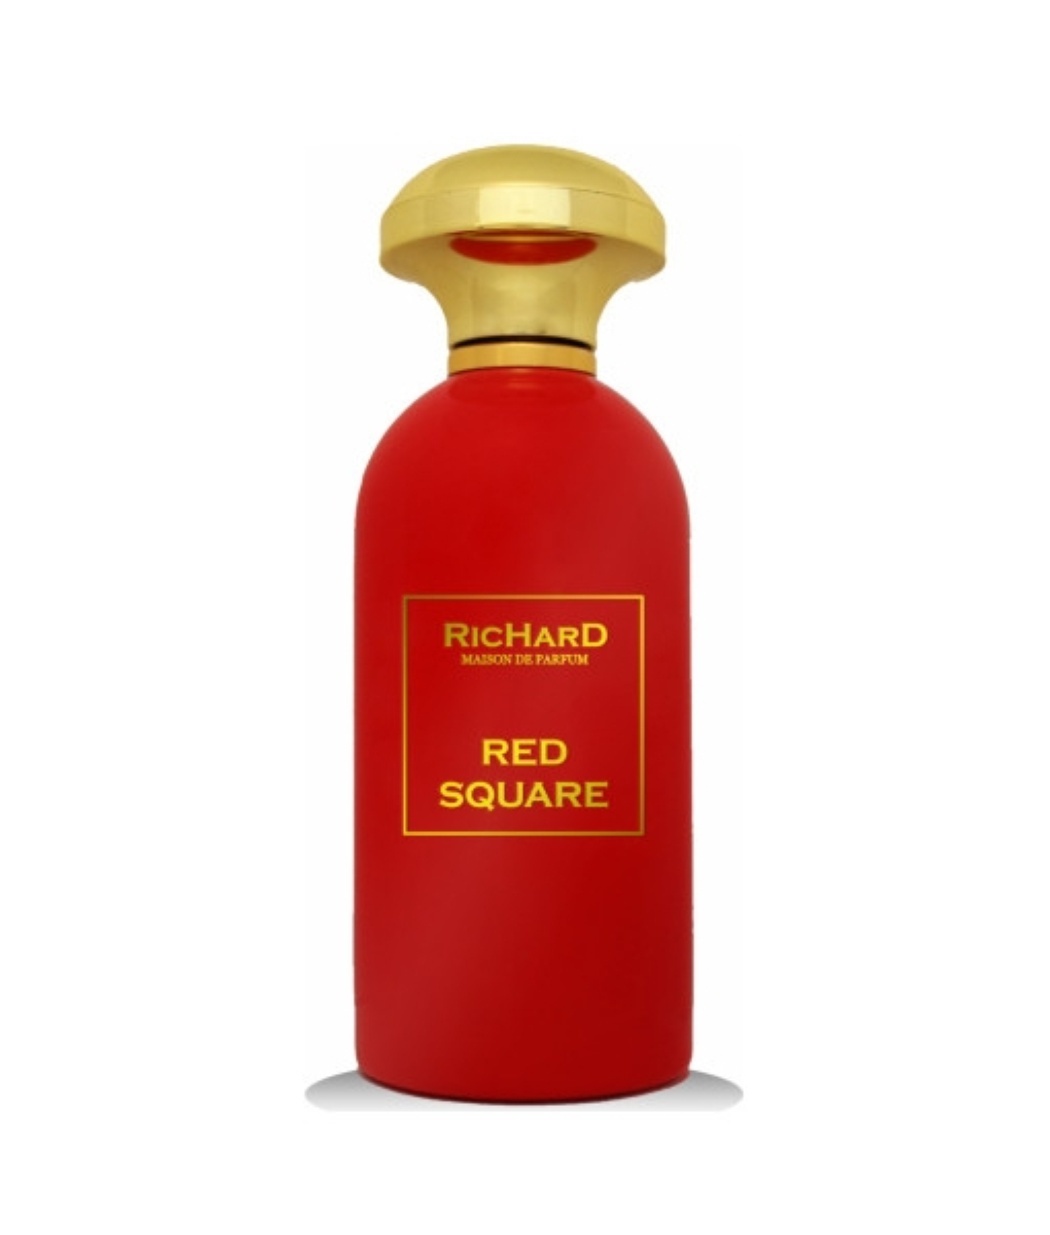 Richard virus. Парфюмерная вода Red Square Eau de Parfum 100 ml Richard Maison. Richard Red Square 100ml.